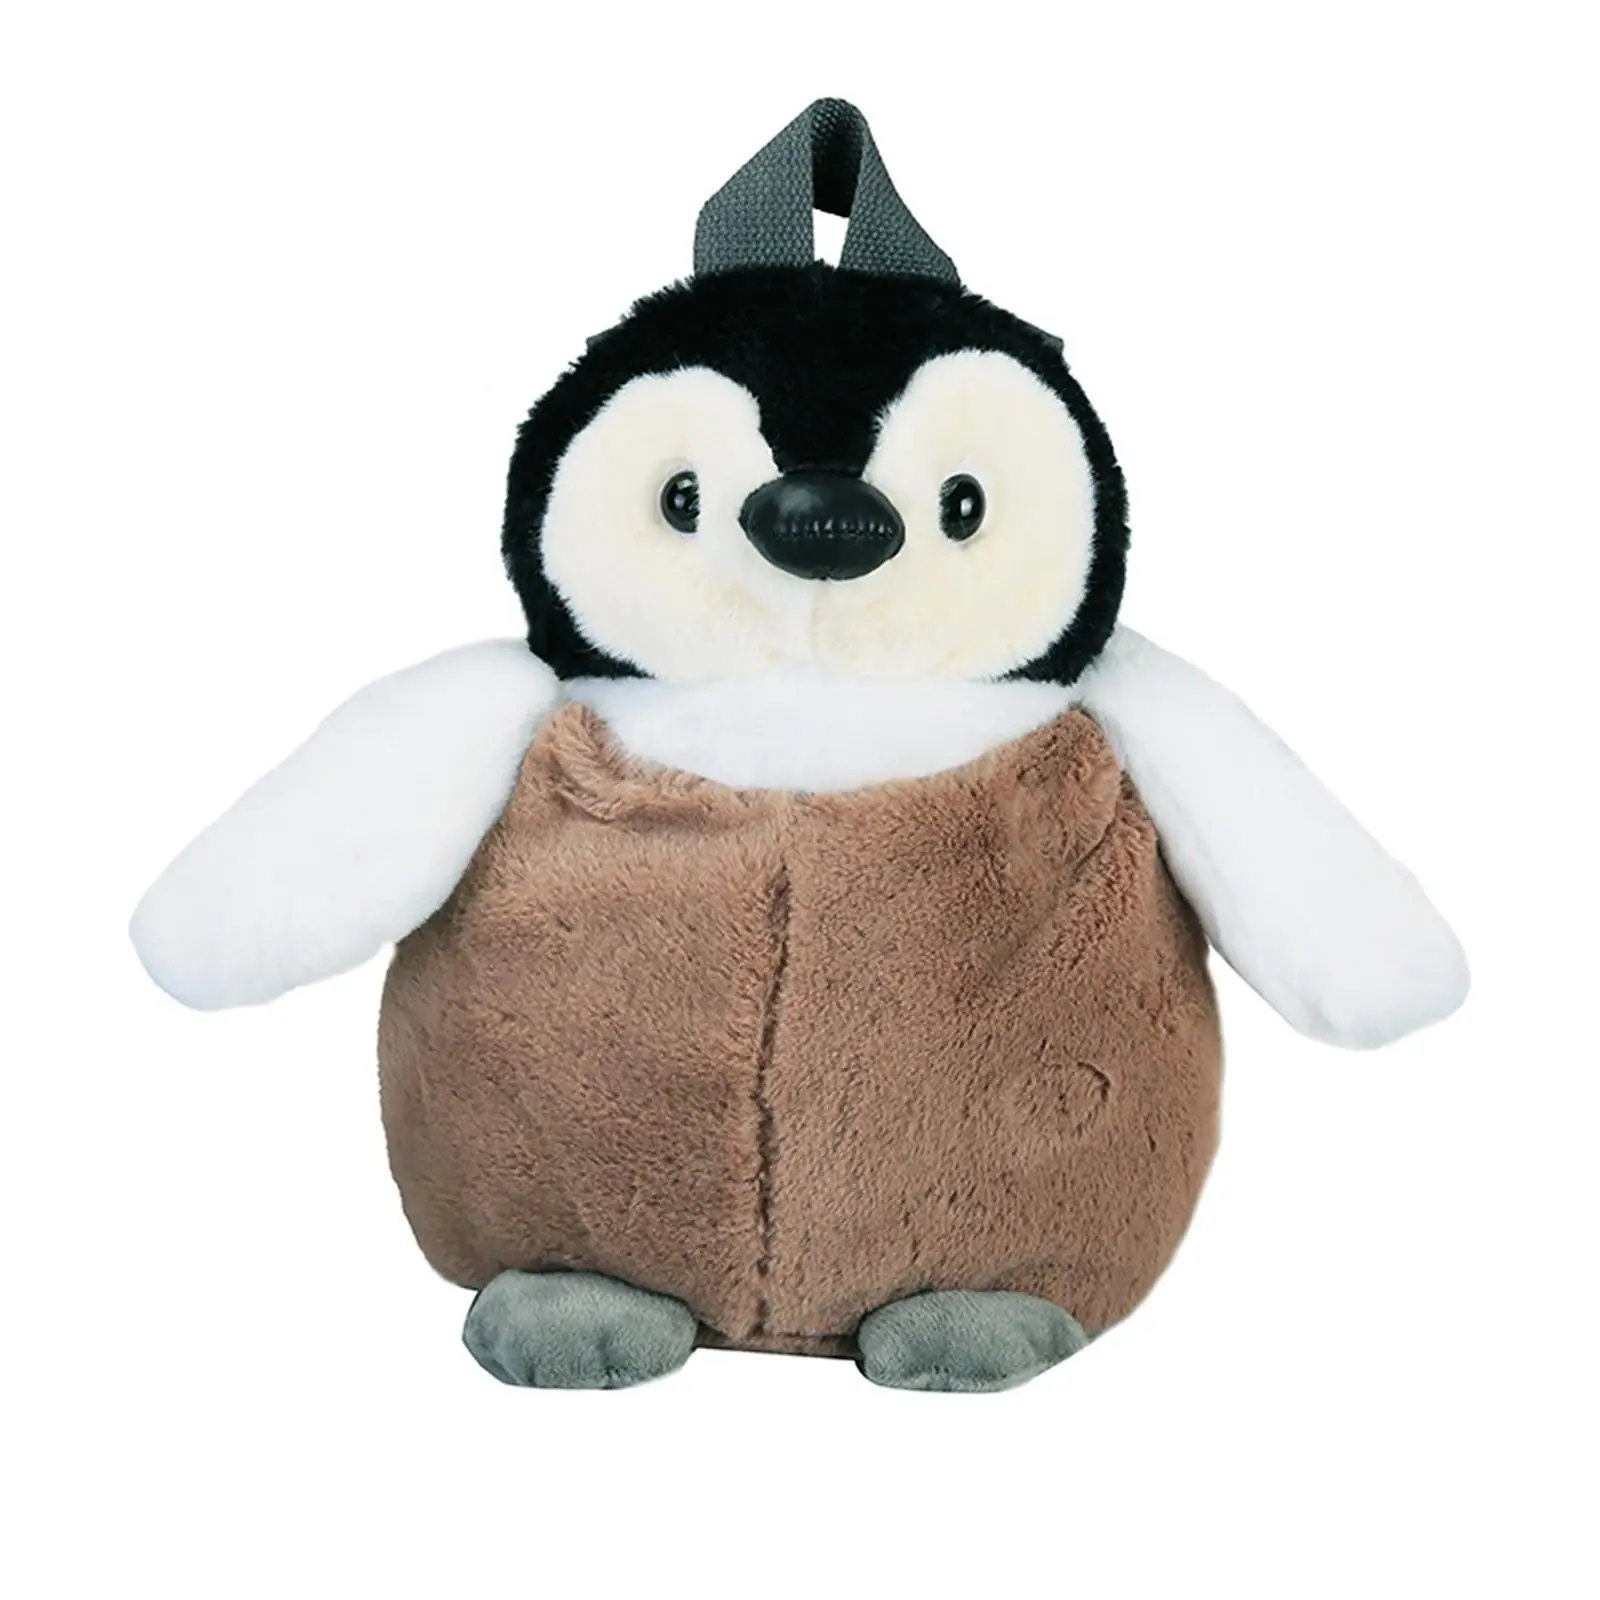 Plush Penguin Backpack Travel Bag Stuffed Penguin Doll Bag Casual Backpack Cute Soft for Kids Adults Baby Women Boys Girls